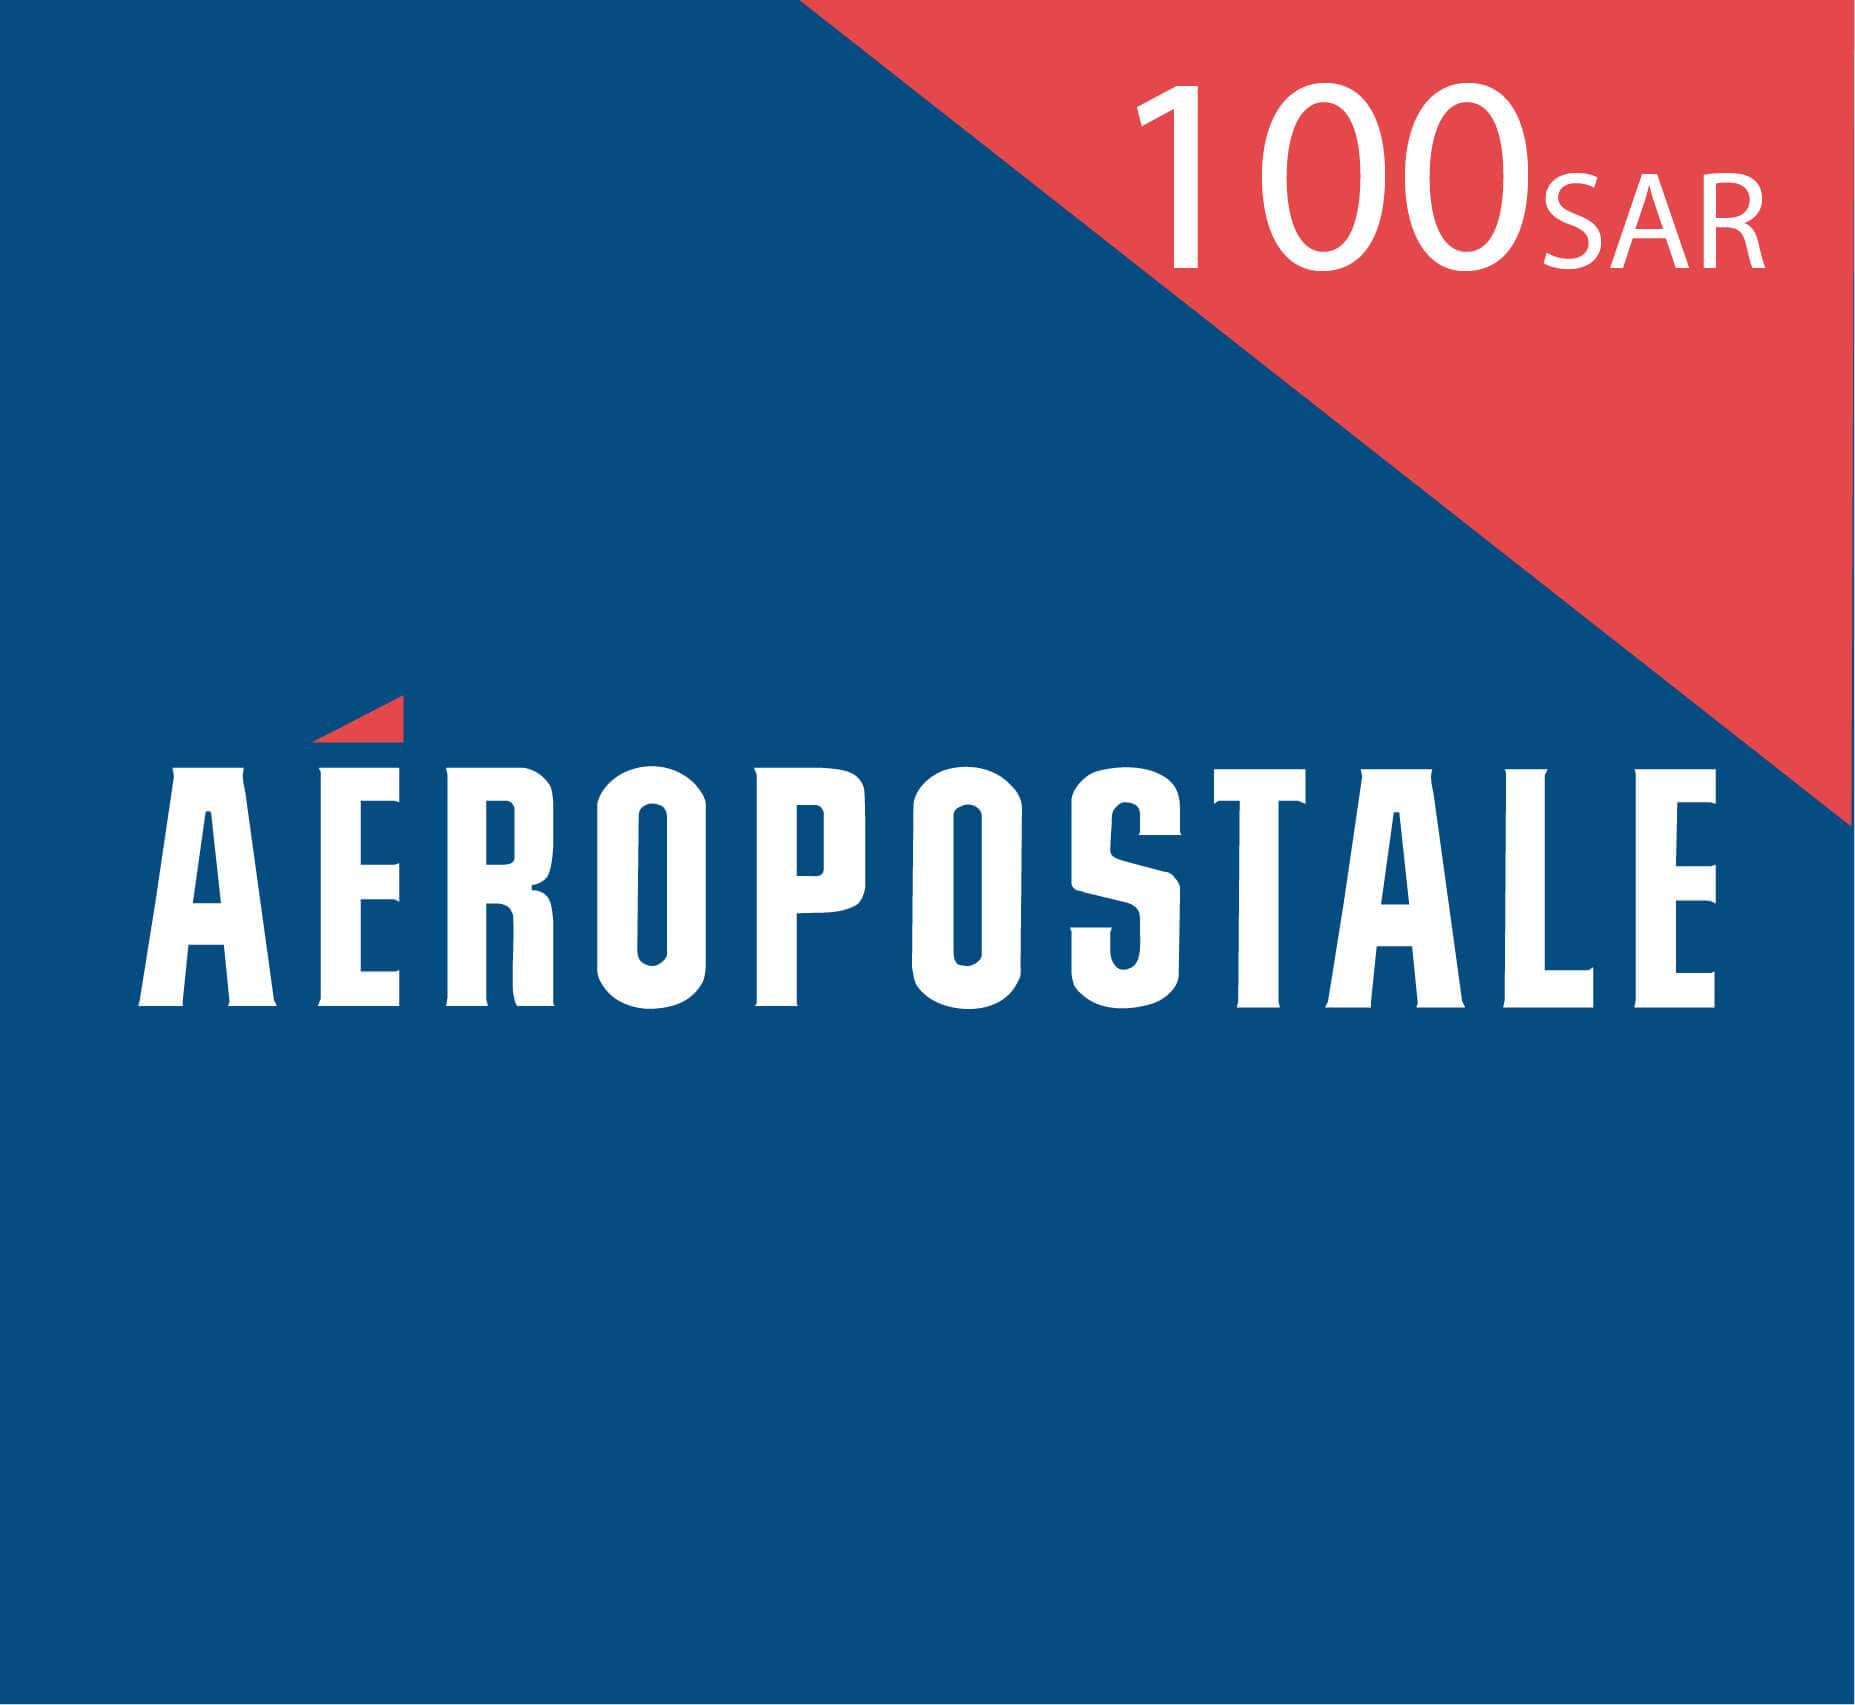 Aeropostale Gift Card - 100 SAR